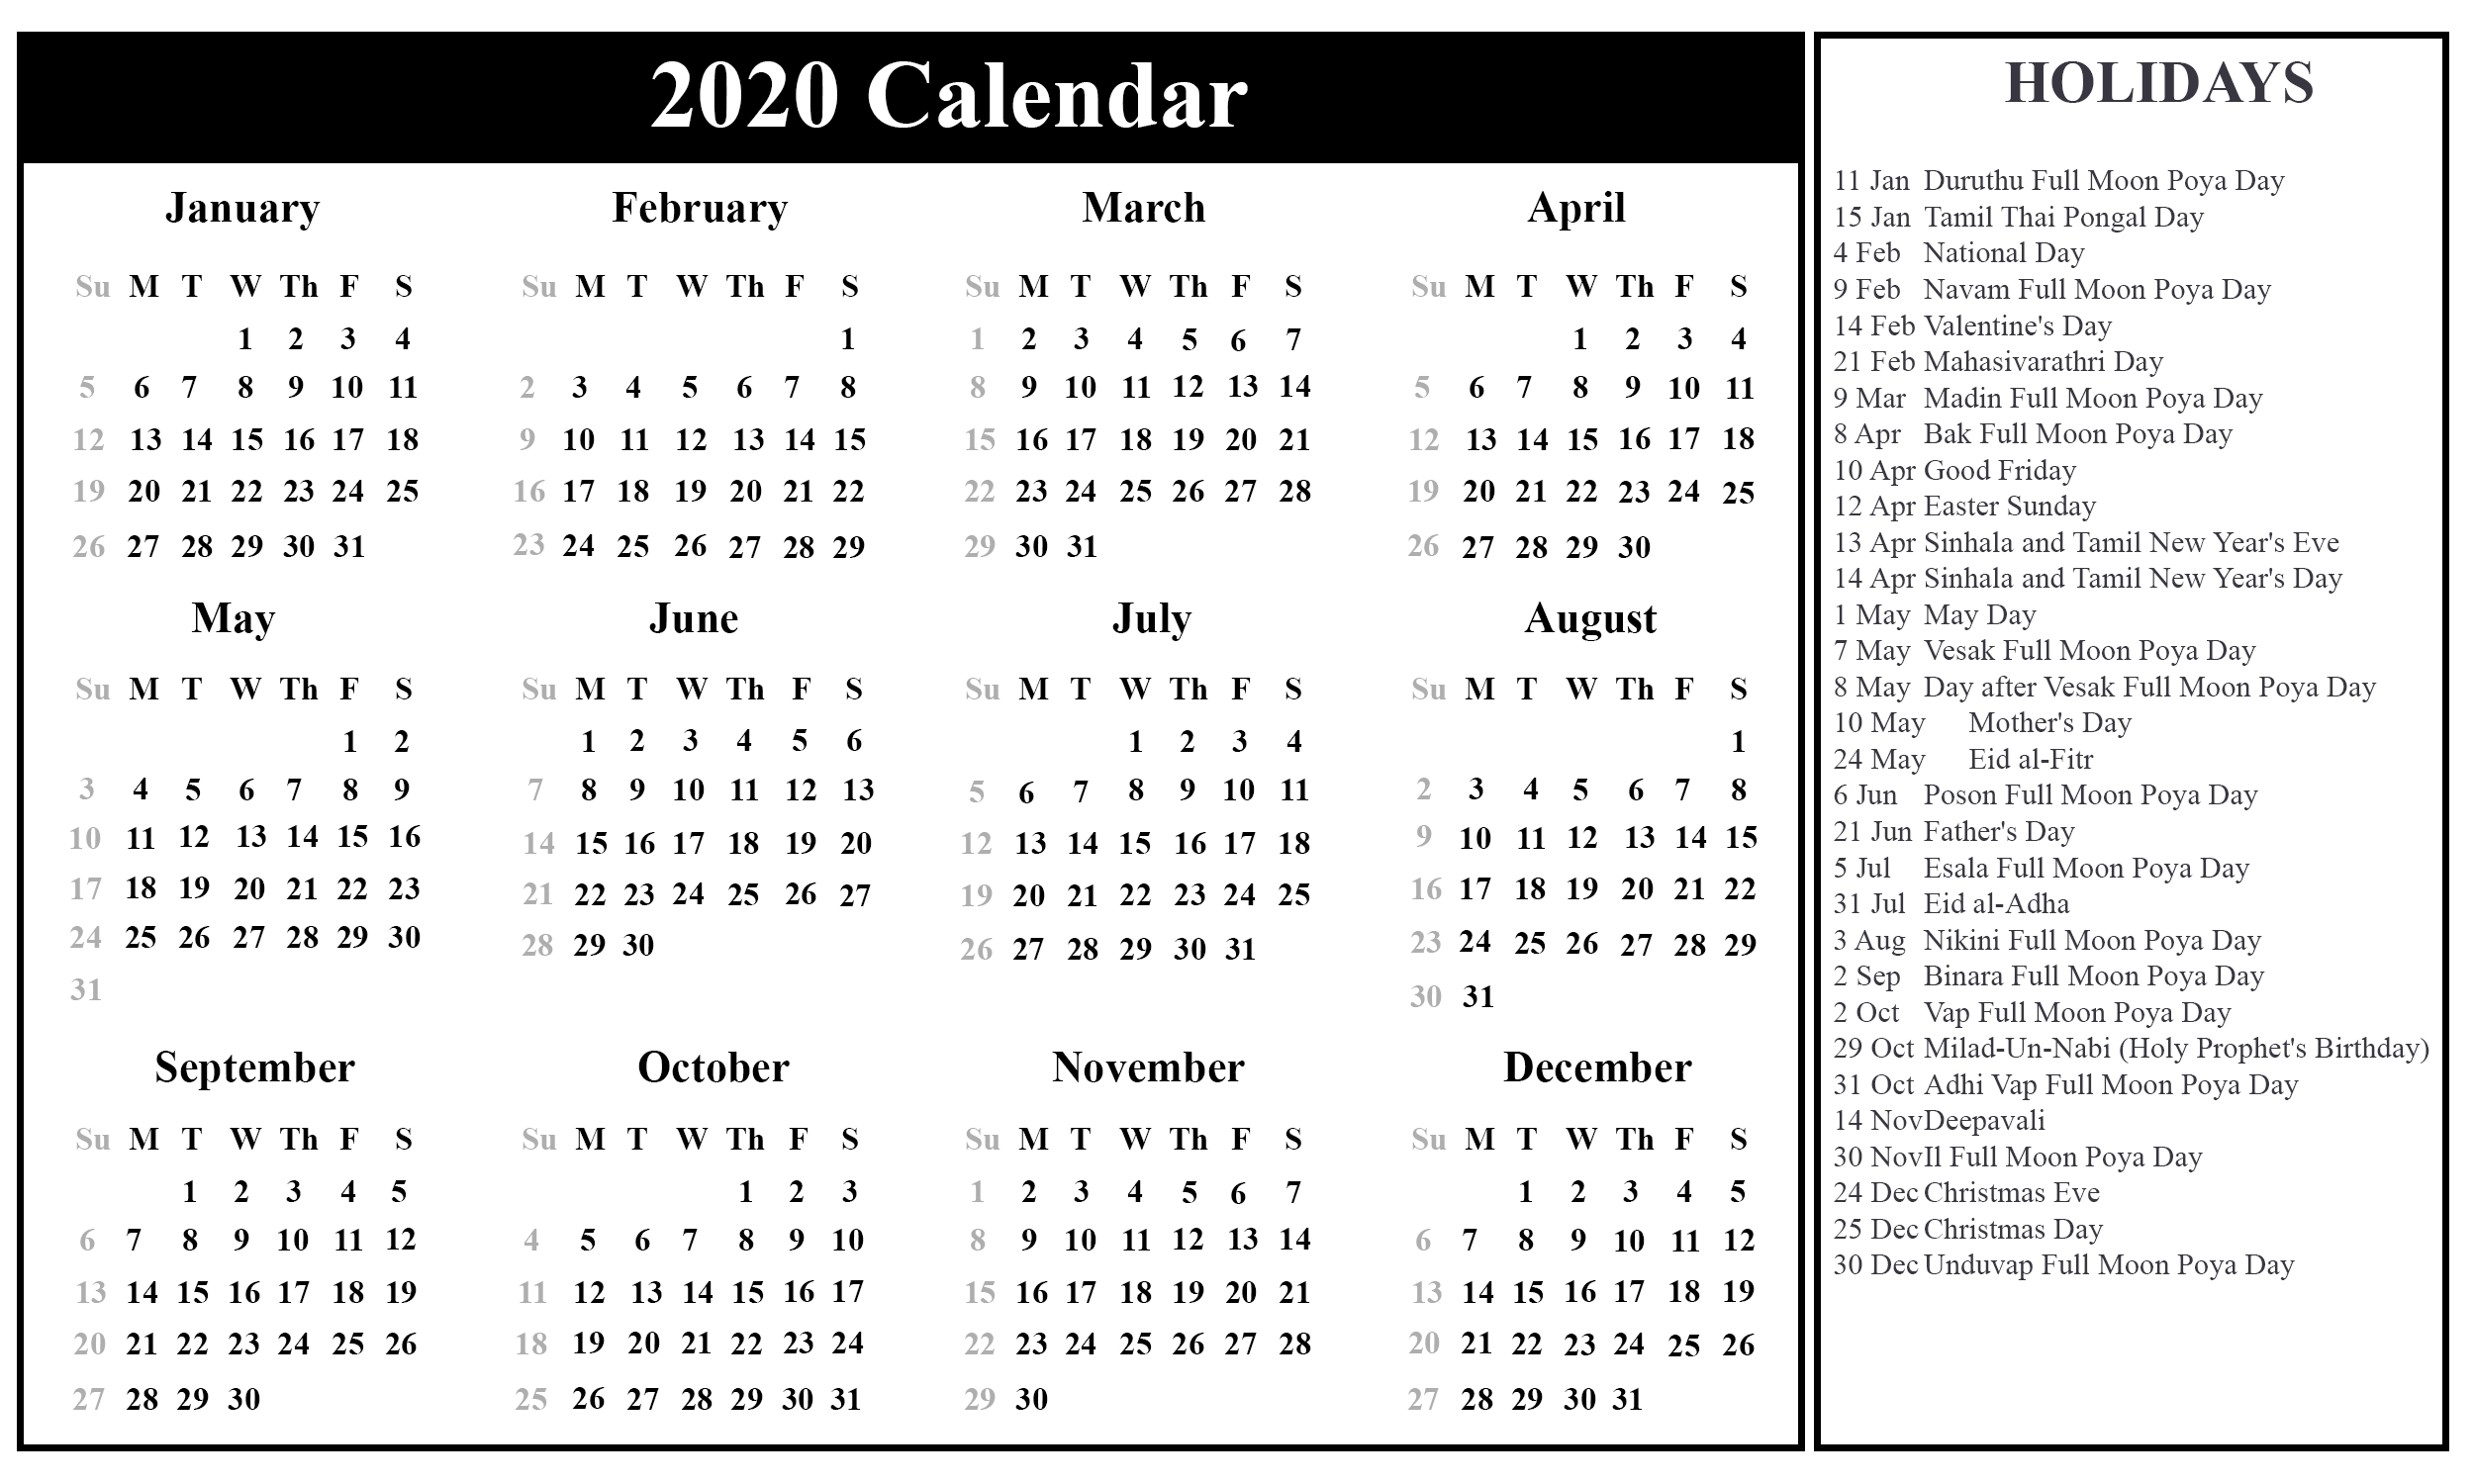 Free Printable Sri Lanka Calendar 2020 With Holidays In Pdf-2020 Calendar Photo Holidays